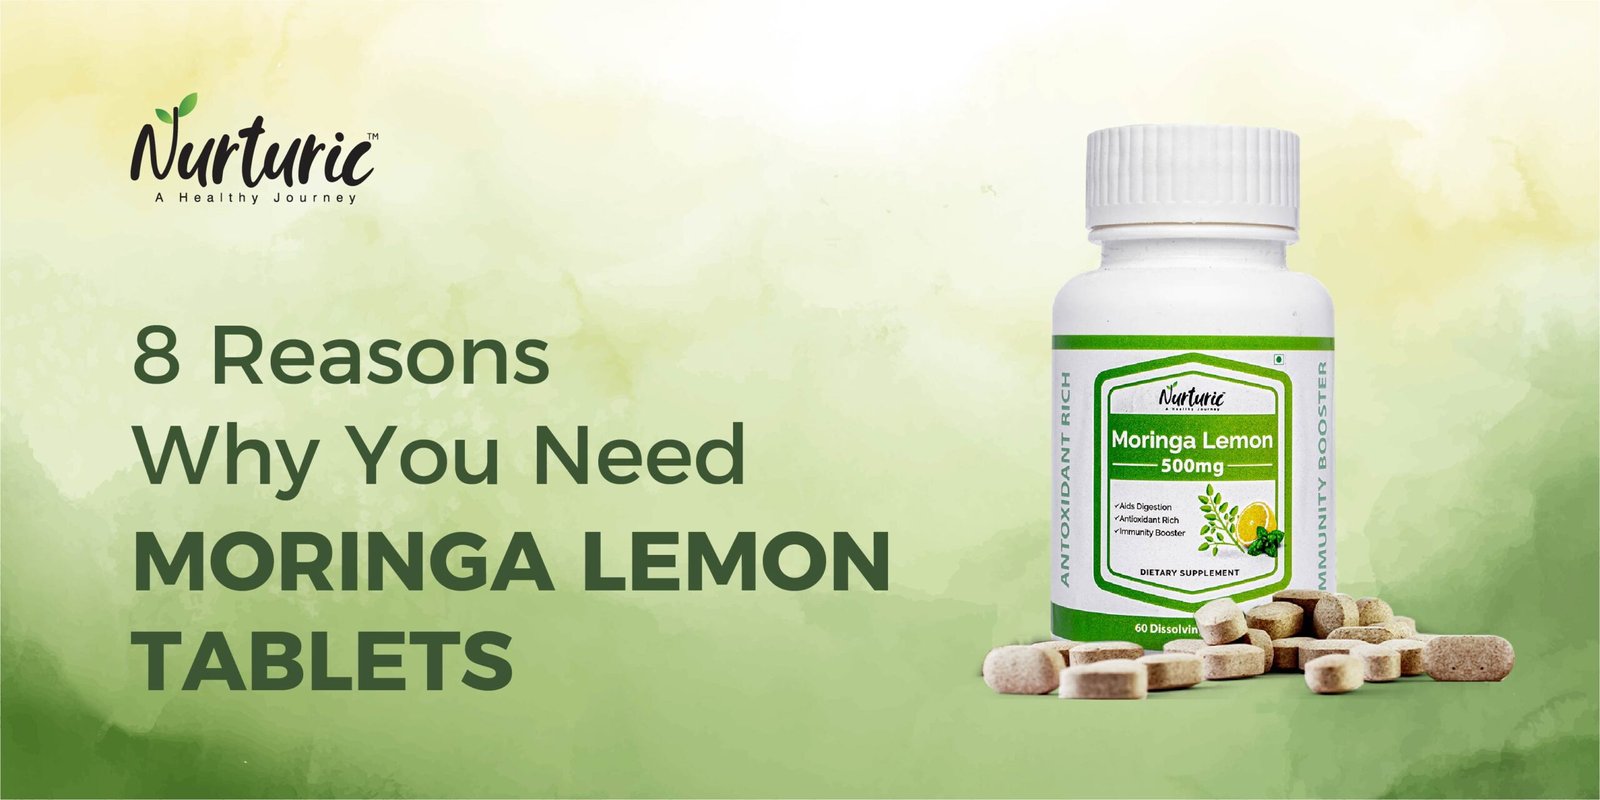 What are the benefits of Moringa Lemon tablets